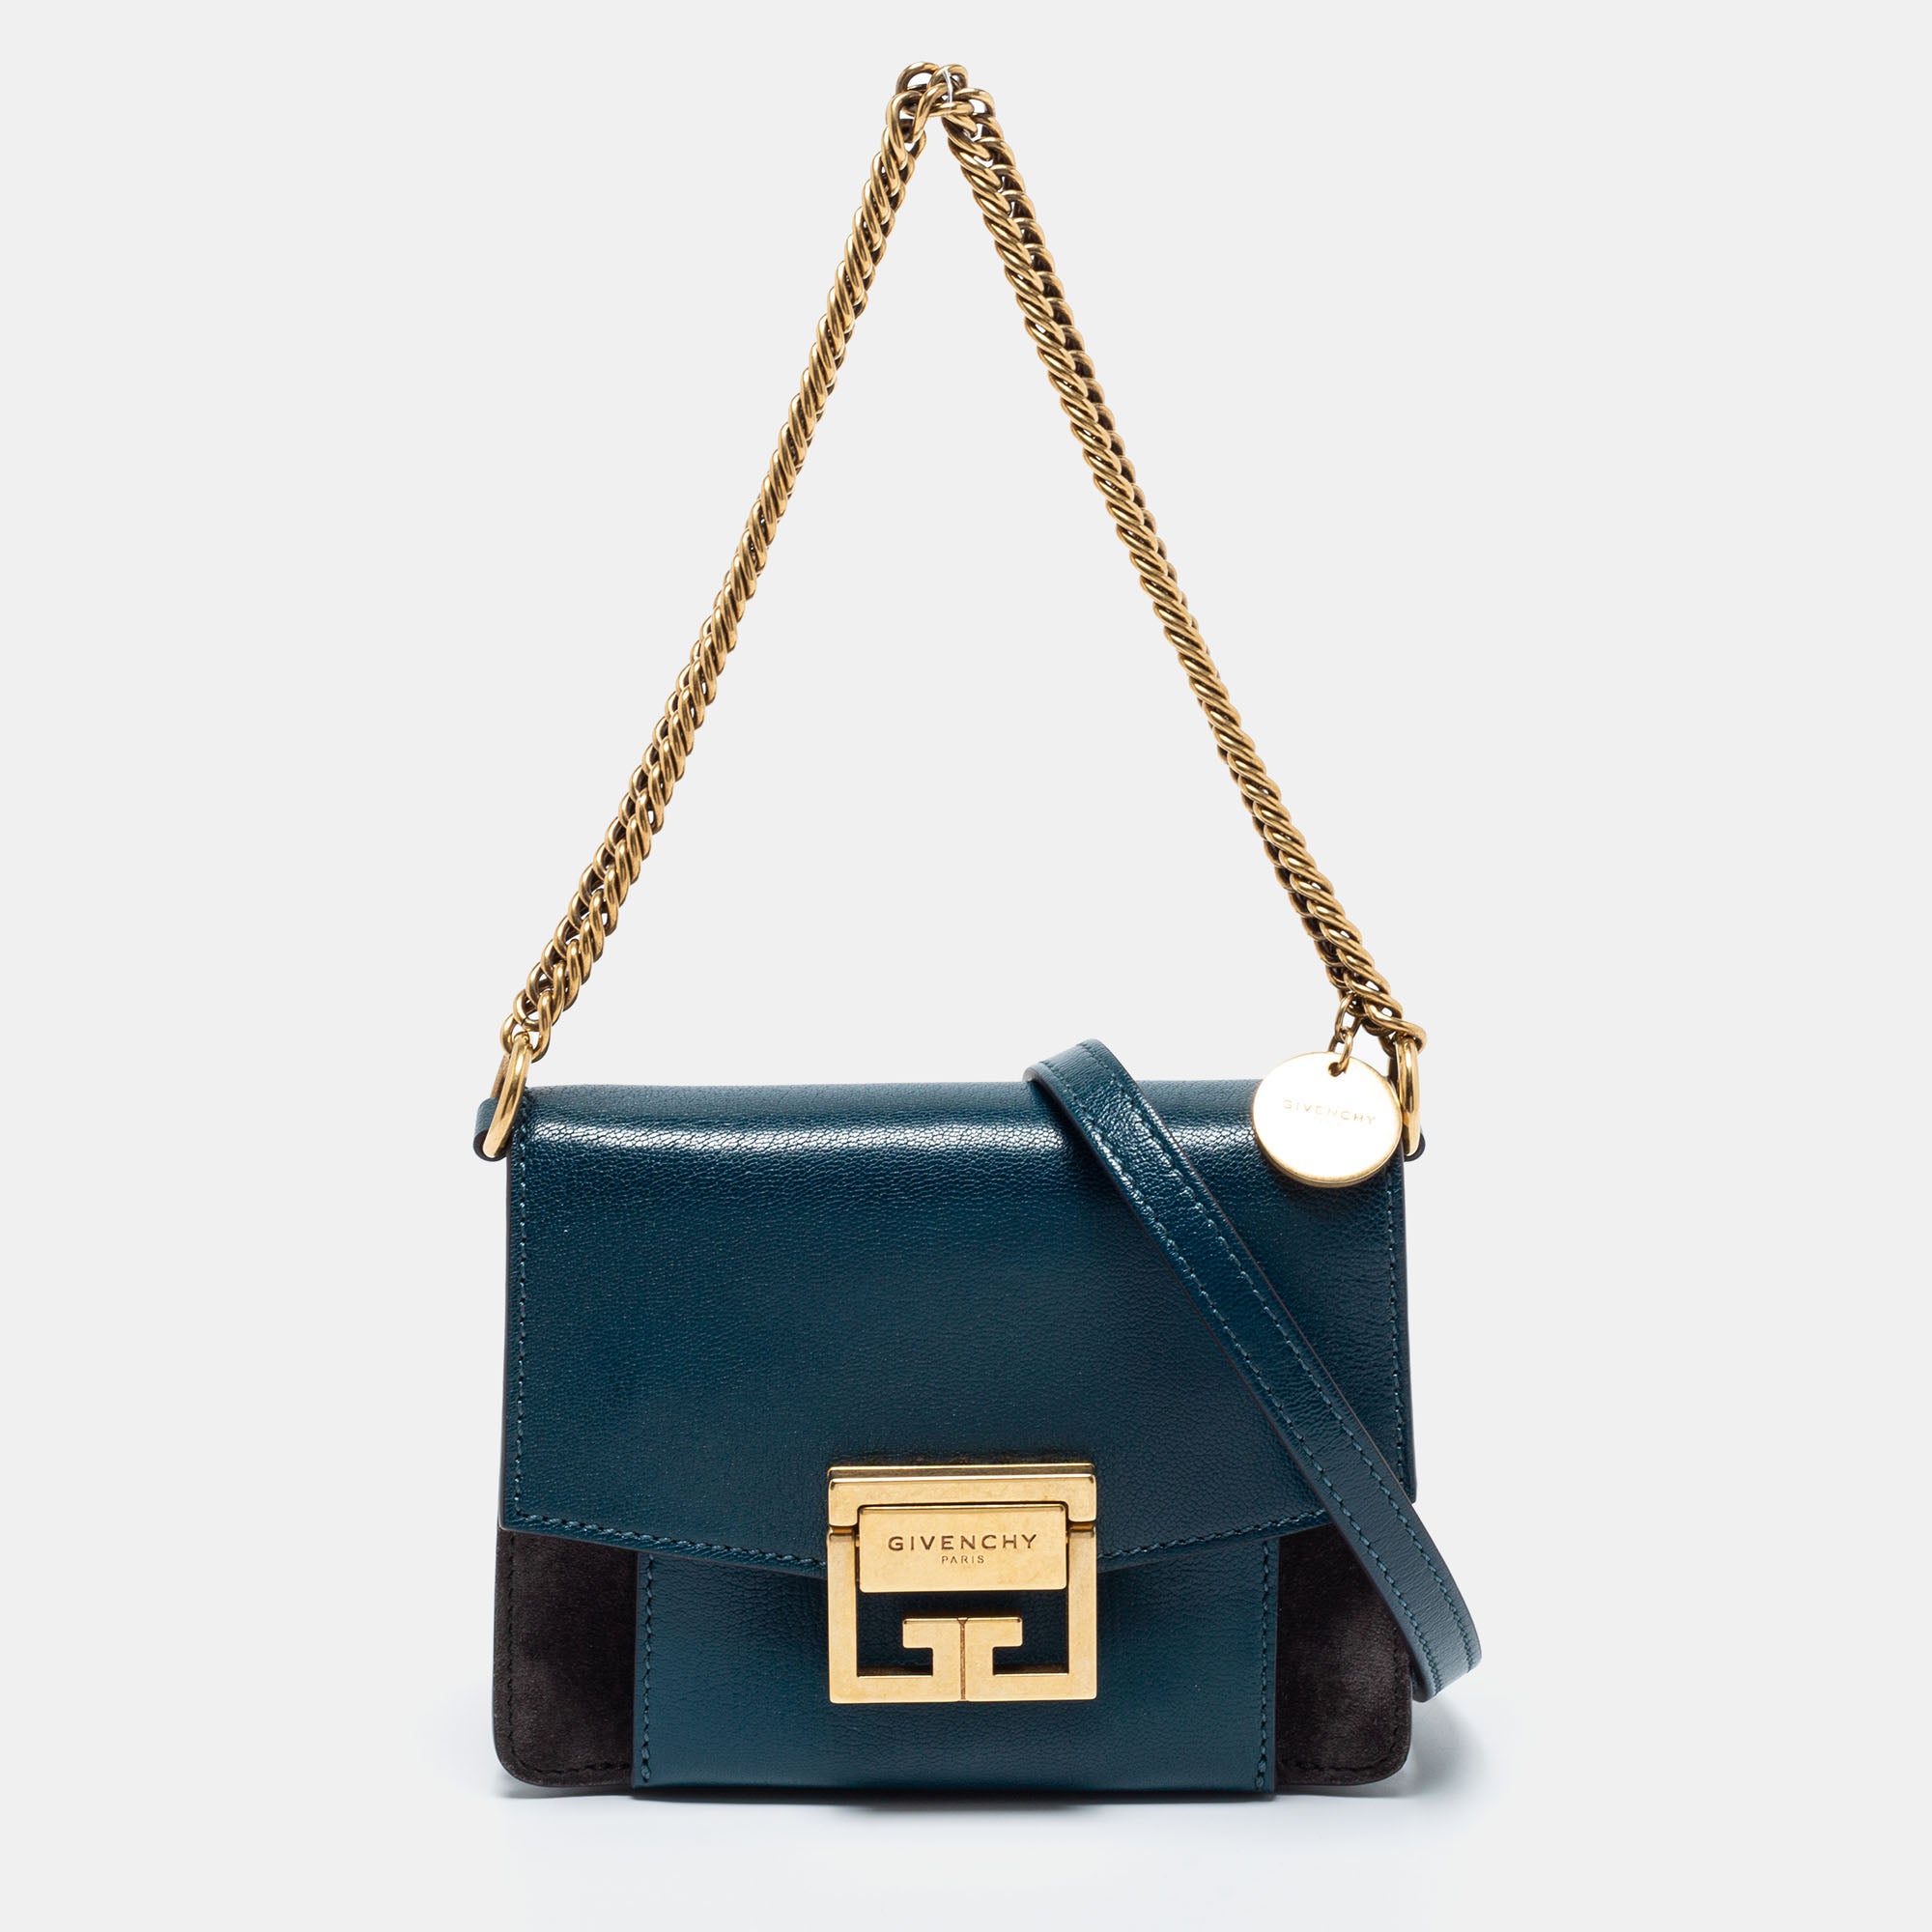 Givenchy Blue/Black Leather And Suede Mini GV3 Shoulder Bag